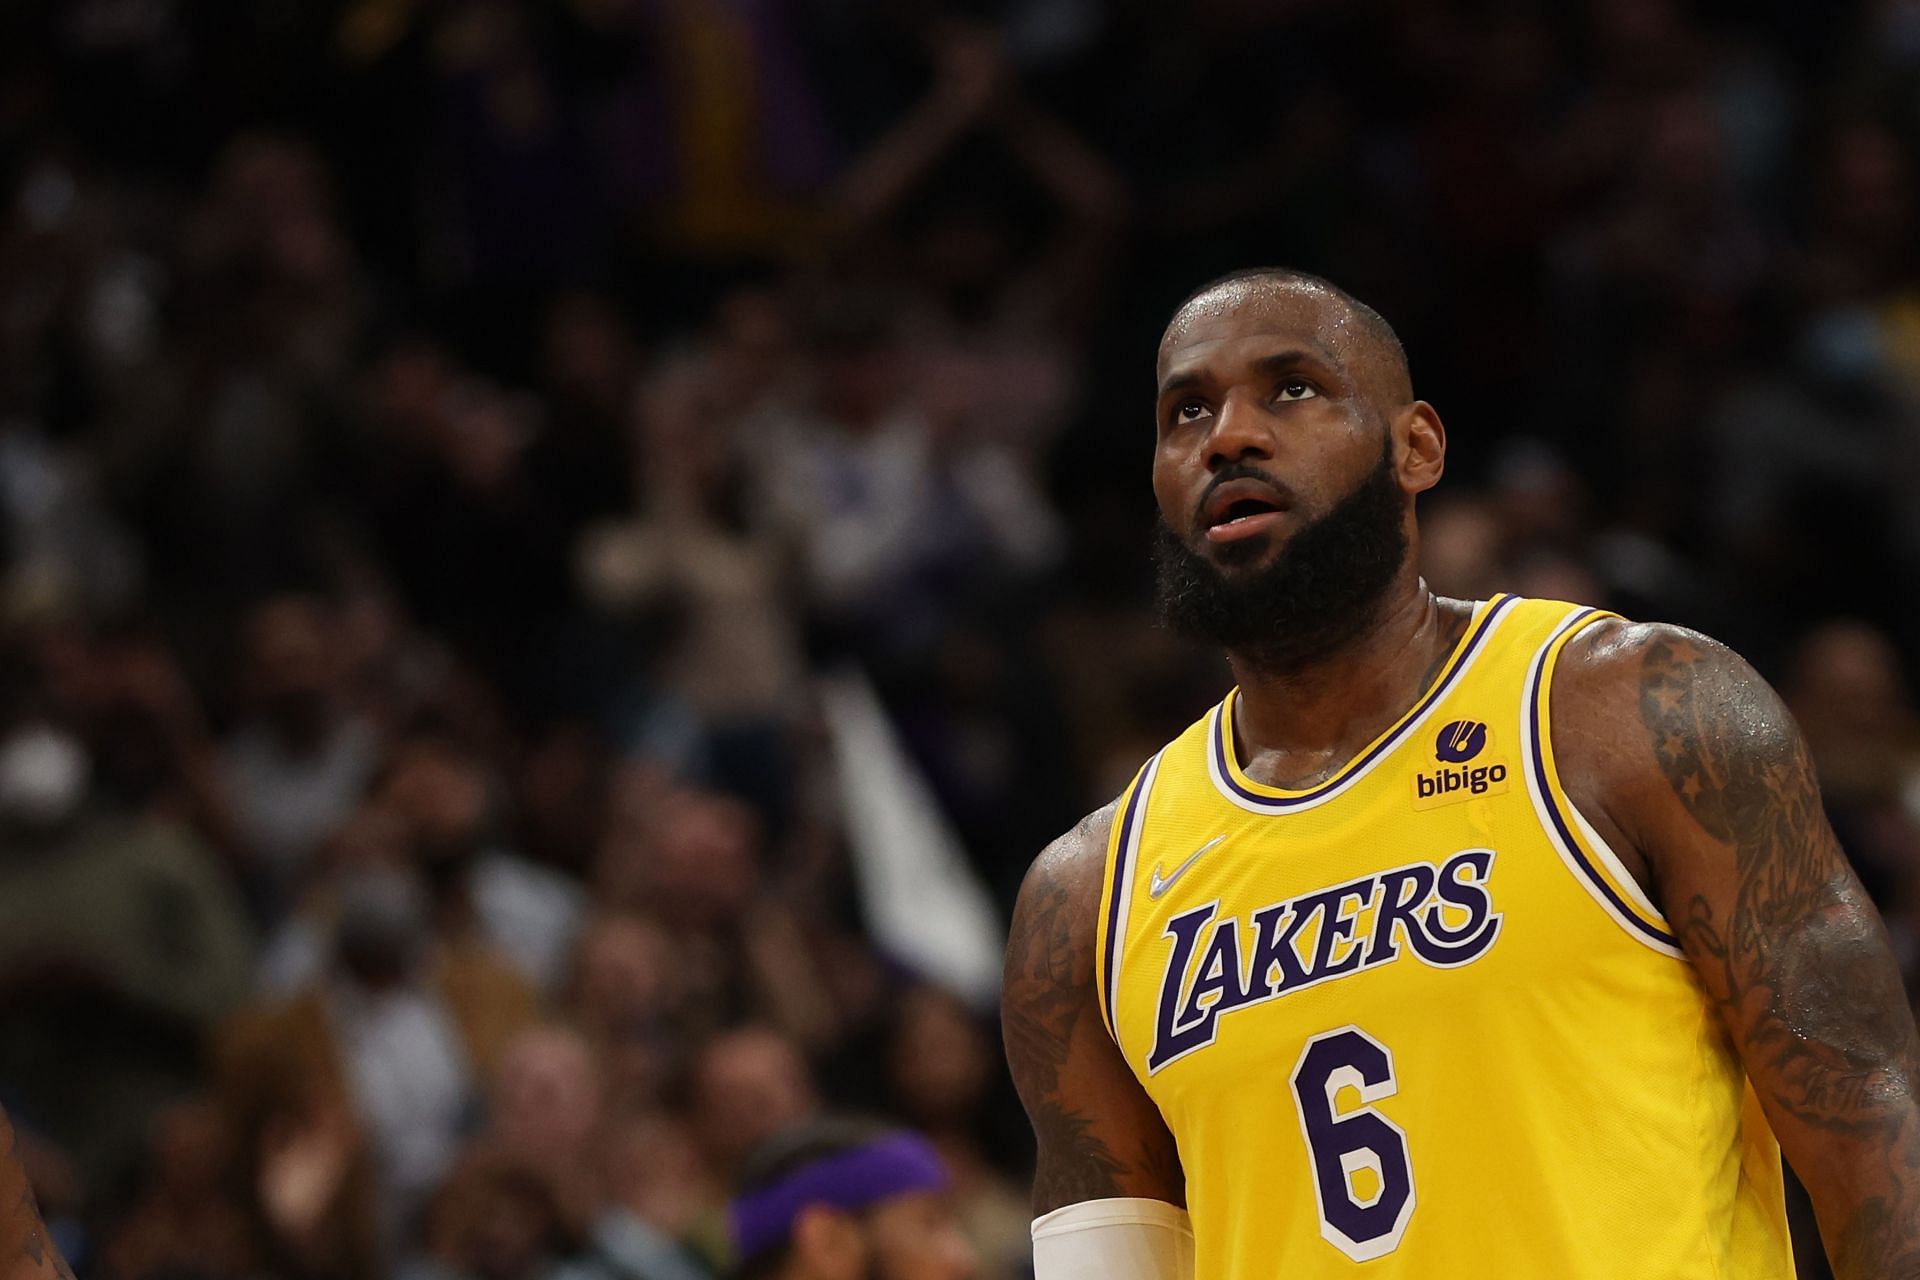 LeBron James of the LA Lakers is entering his 20th season.